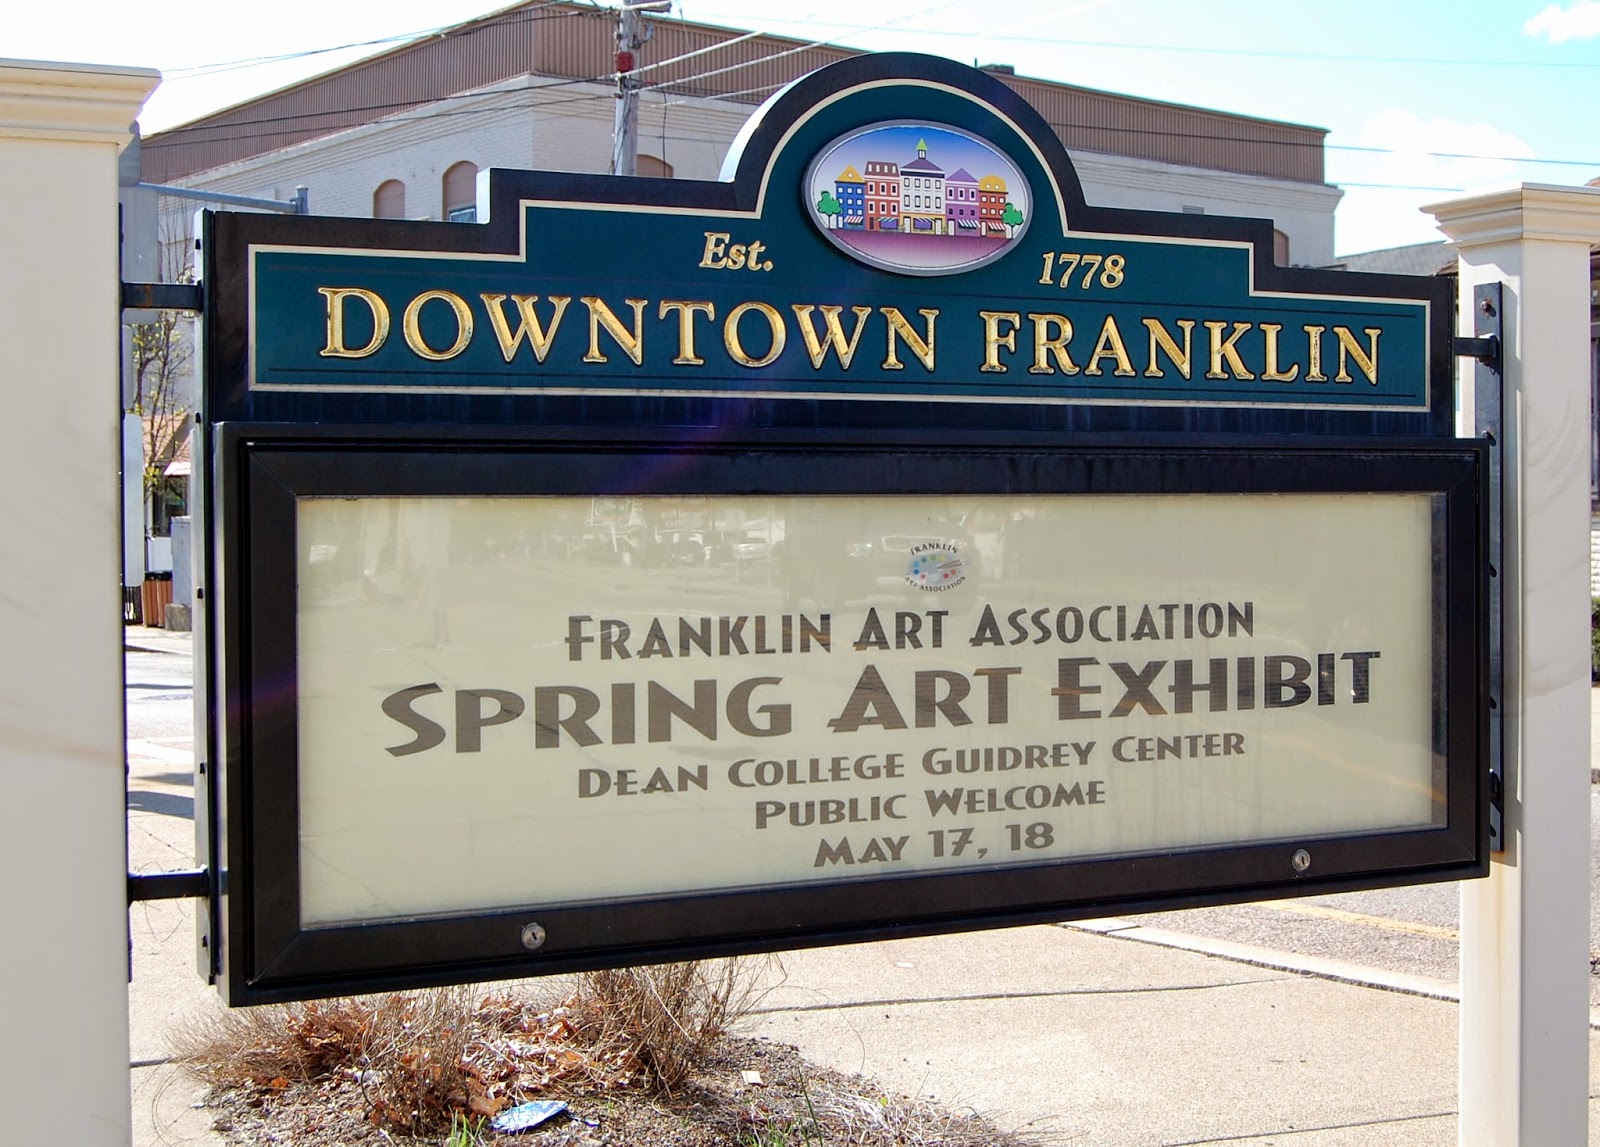 Spring Art Exhibit - May 17-18